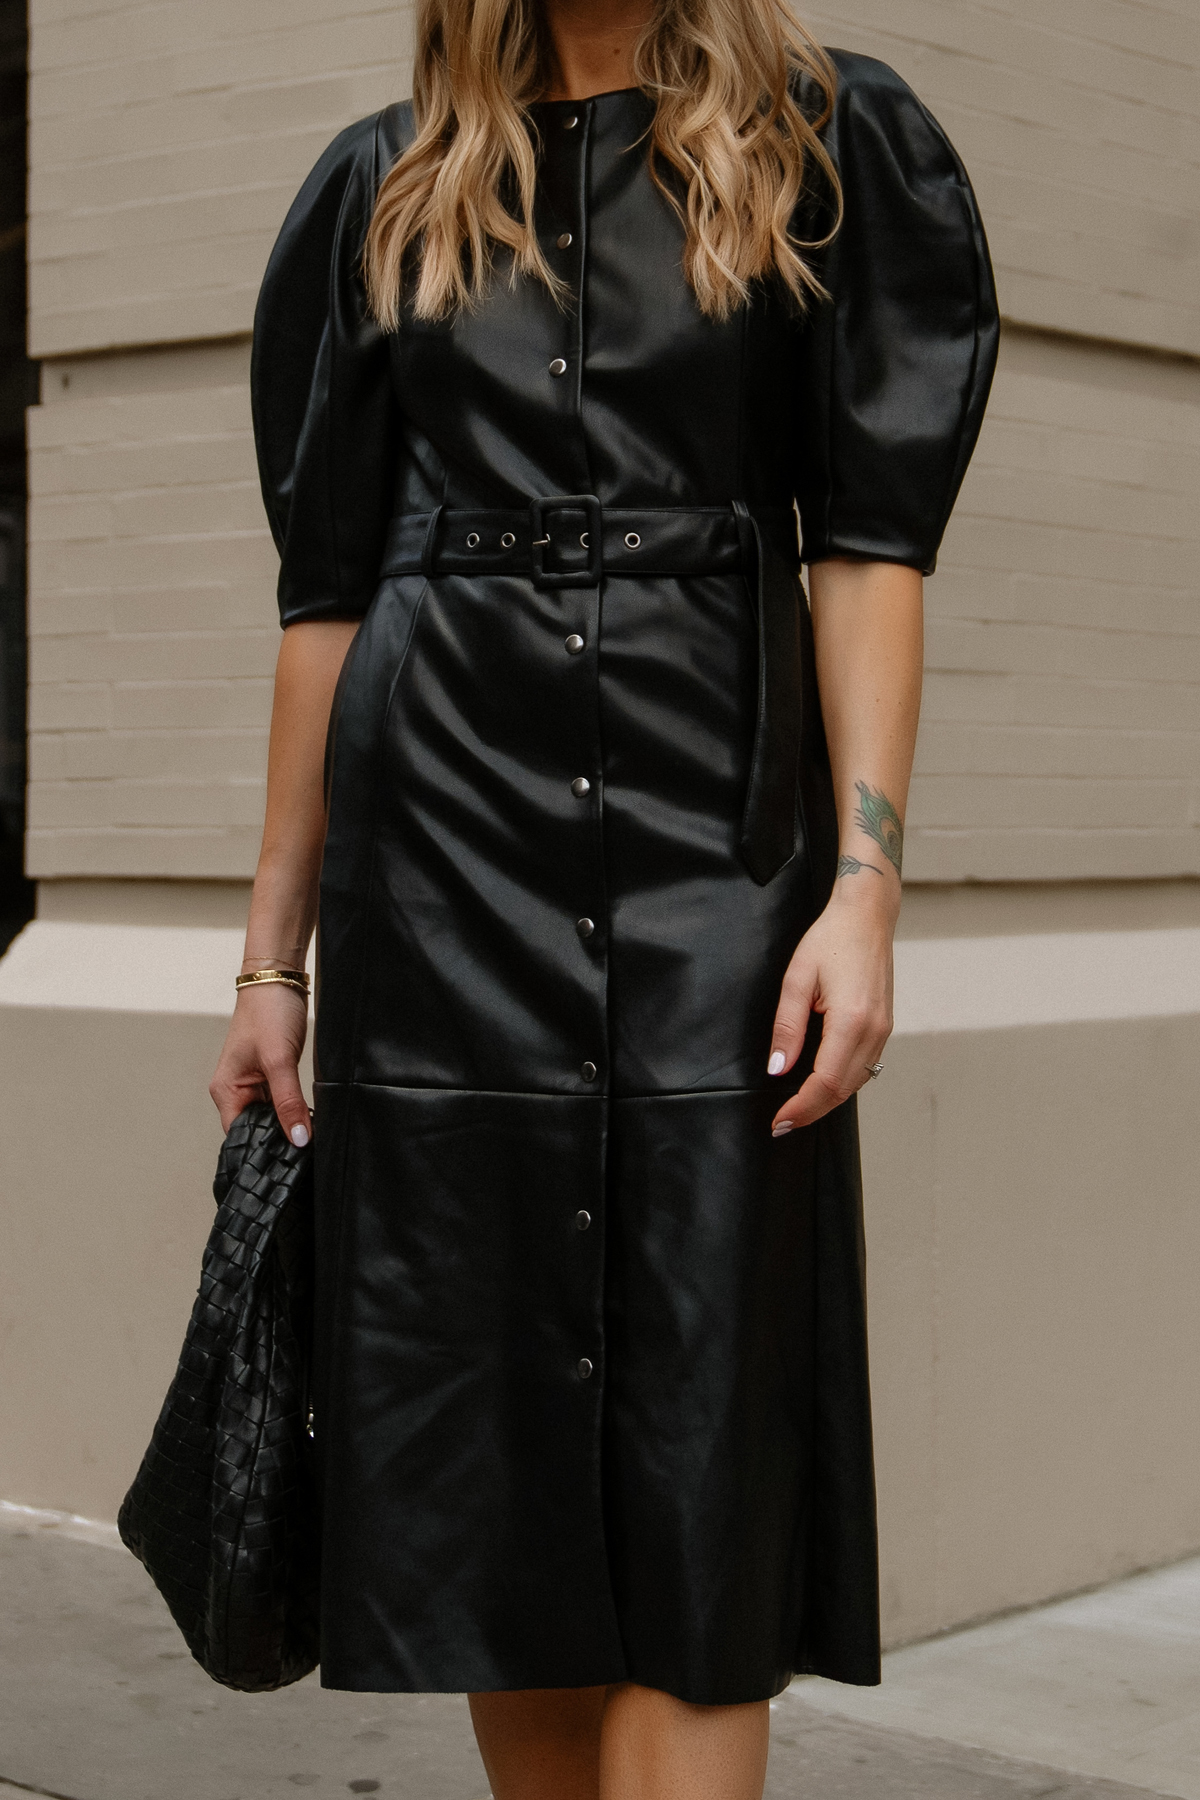 Fashion Jackson Wearing MAYSON the label black leather midi dress